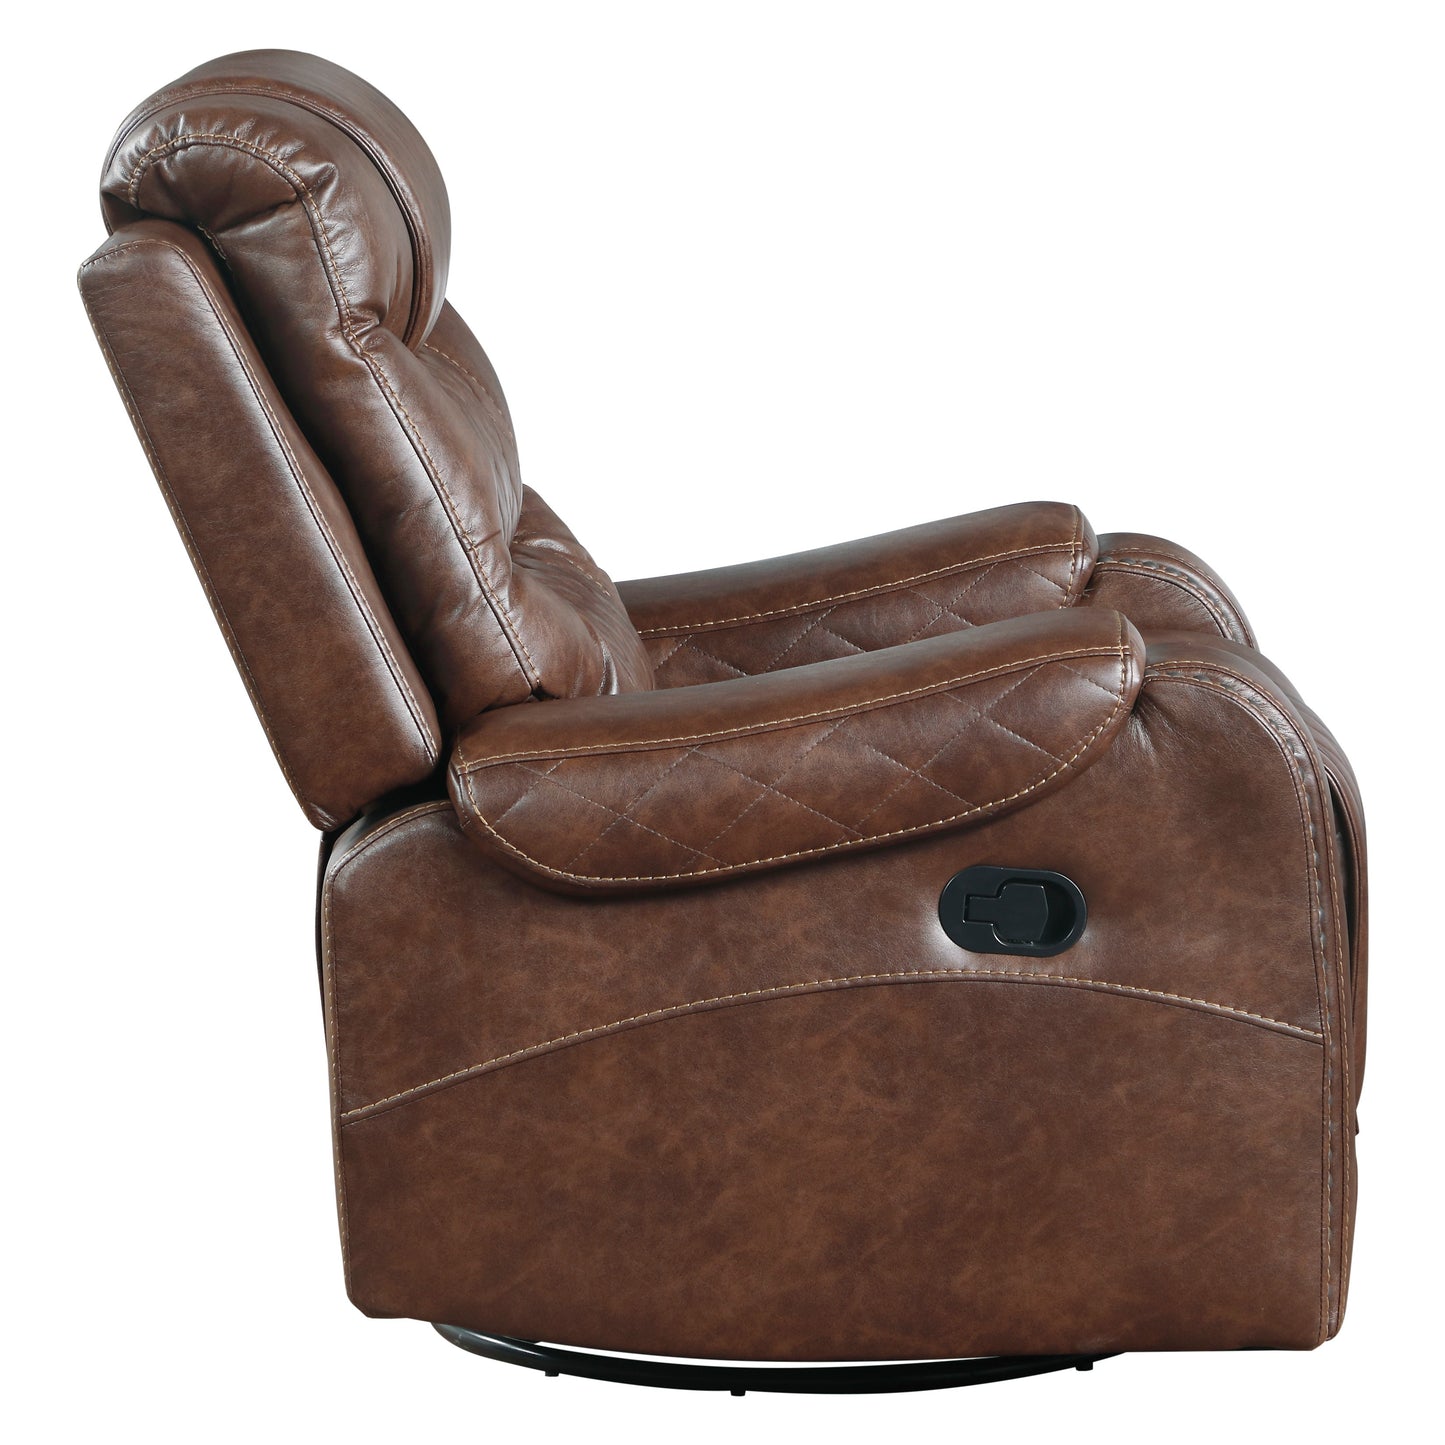 9405BR-1 Swivel Glider Reclining Chair